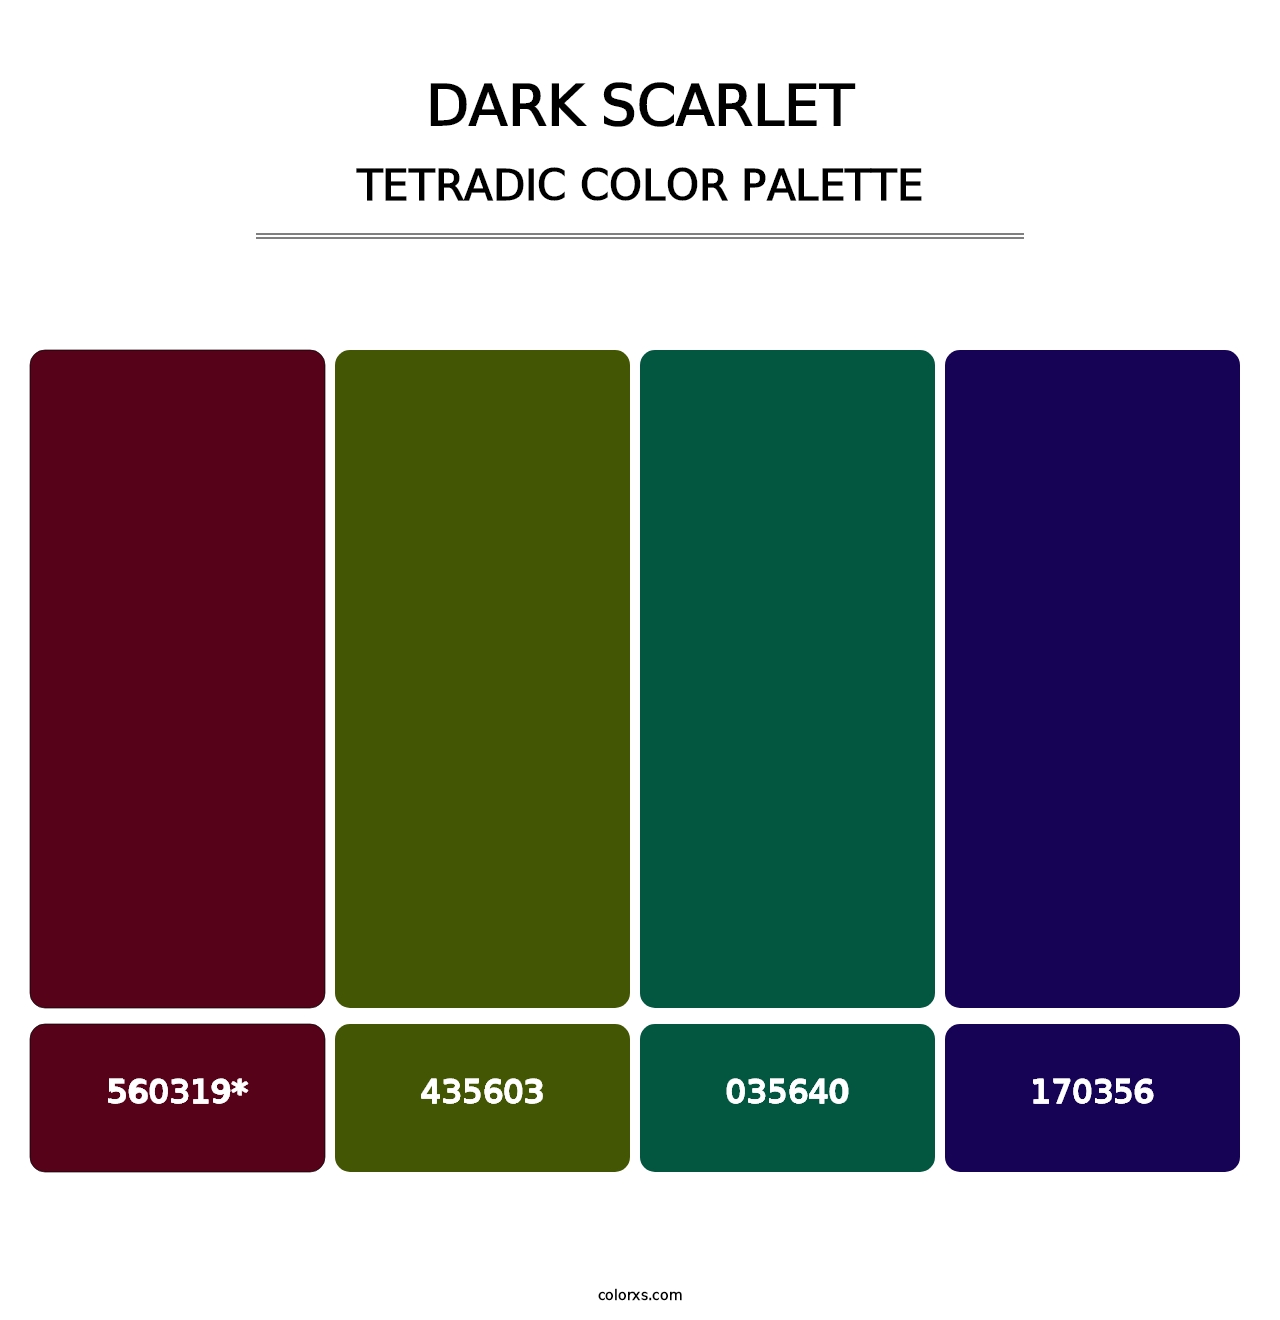 Dark Scarlet - Tetradic Color Palette